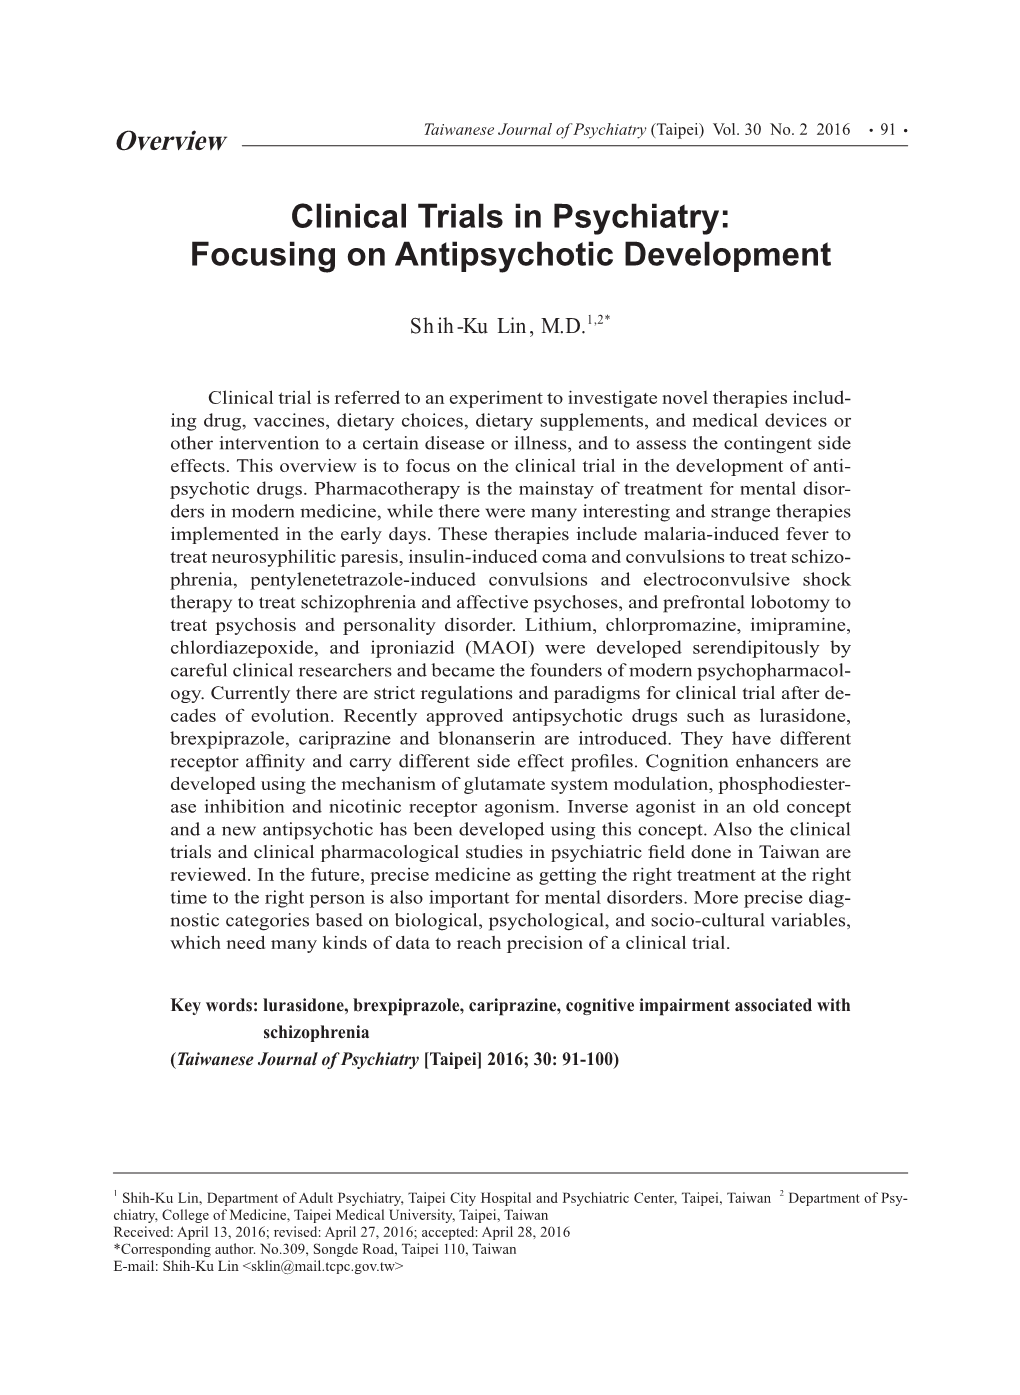 Clinical Trials in Psychiatry: Focusing on Antipsychotic Development